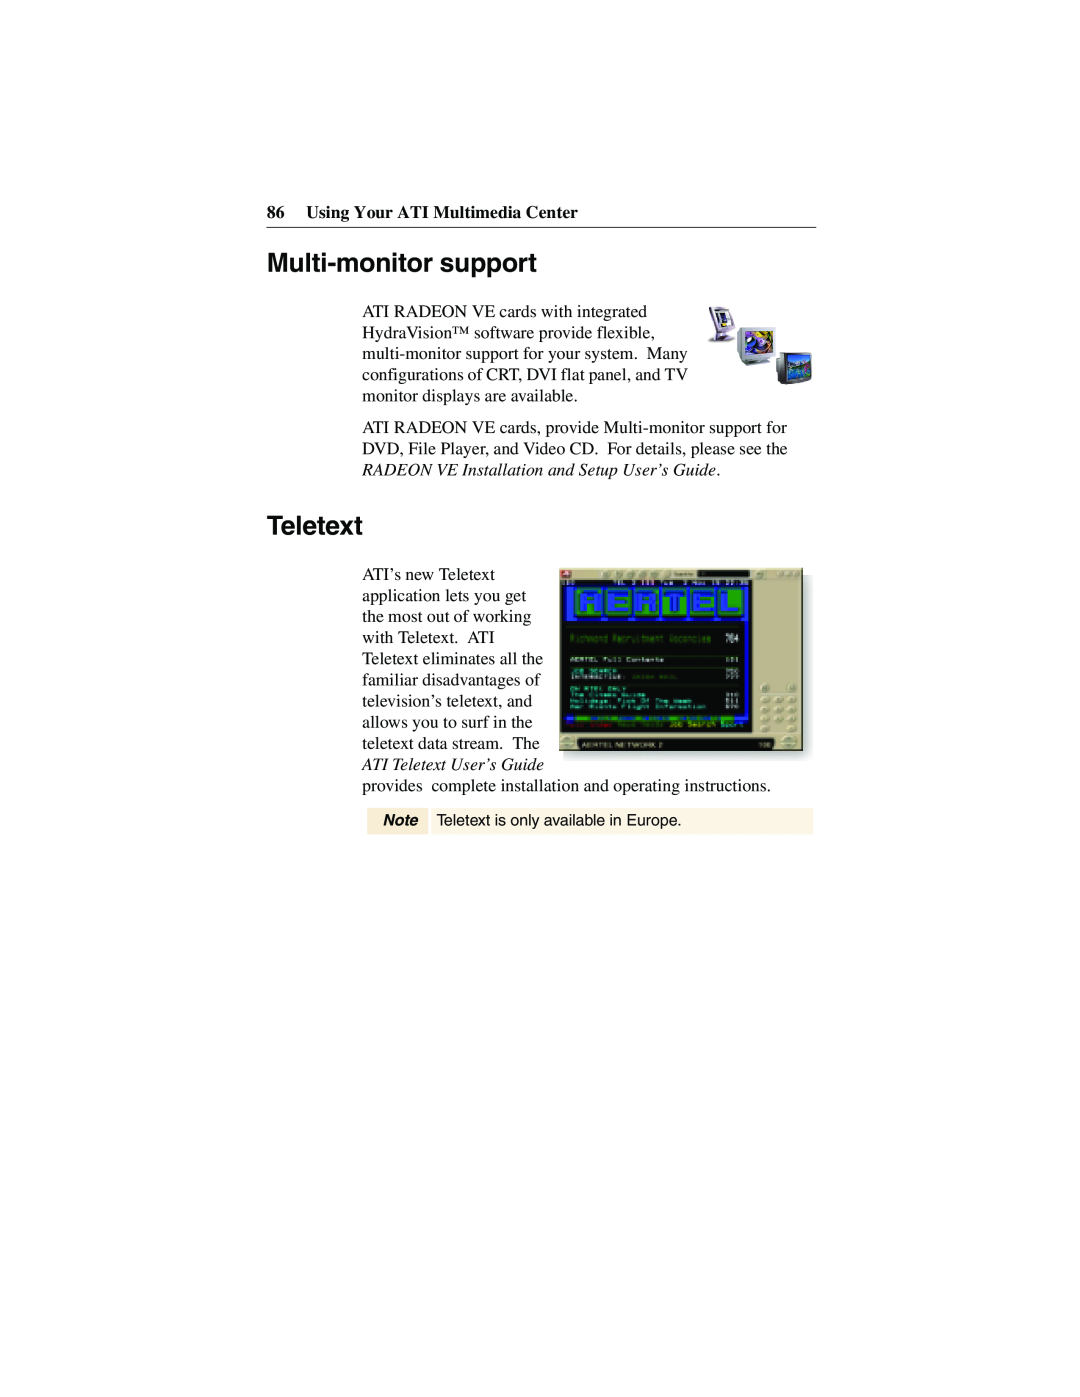 ATI Technologies 137-40188-60 specifications Multi-monitorsupport, Teletext, Using Your ATI Multimedia Center 